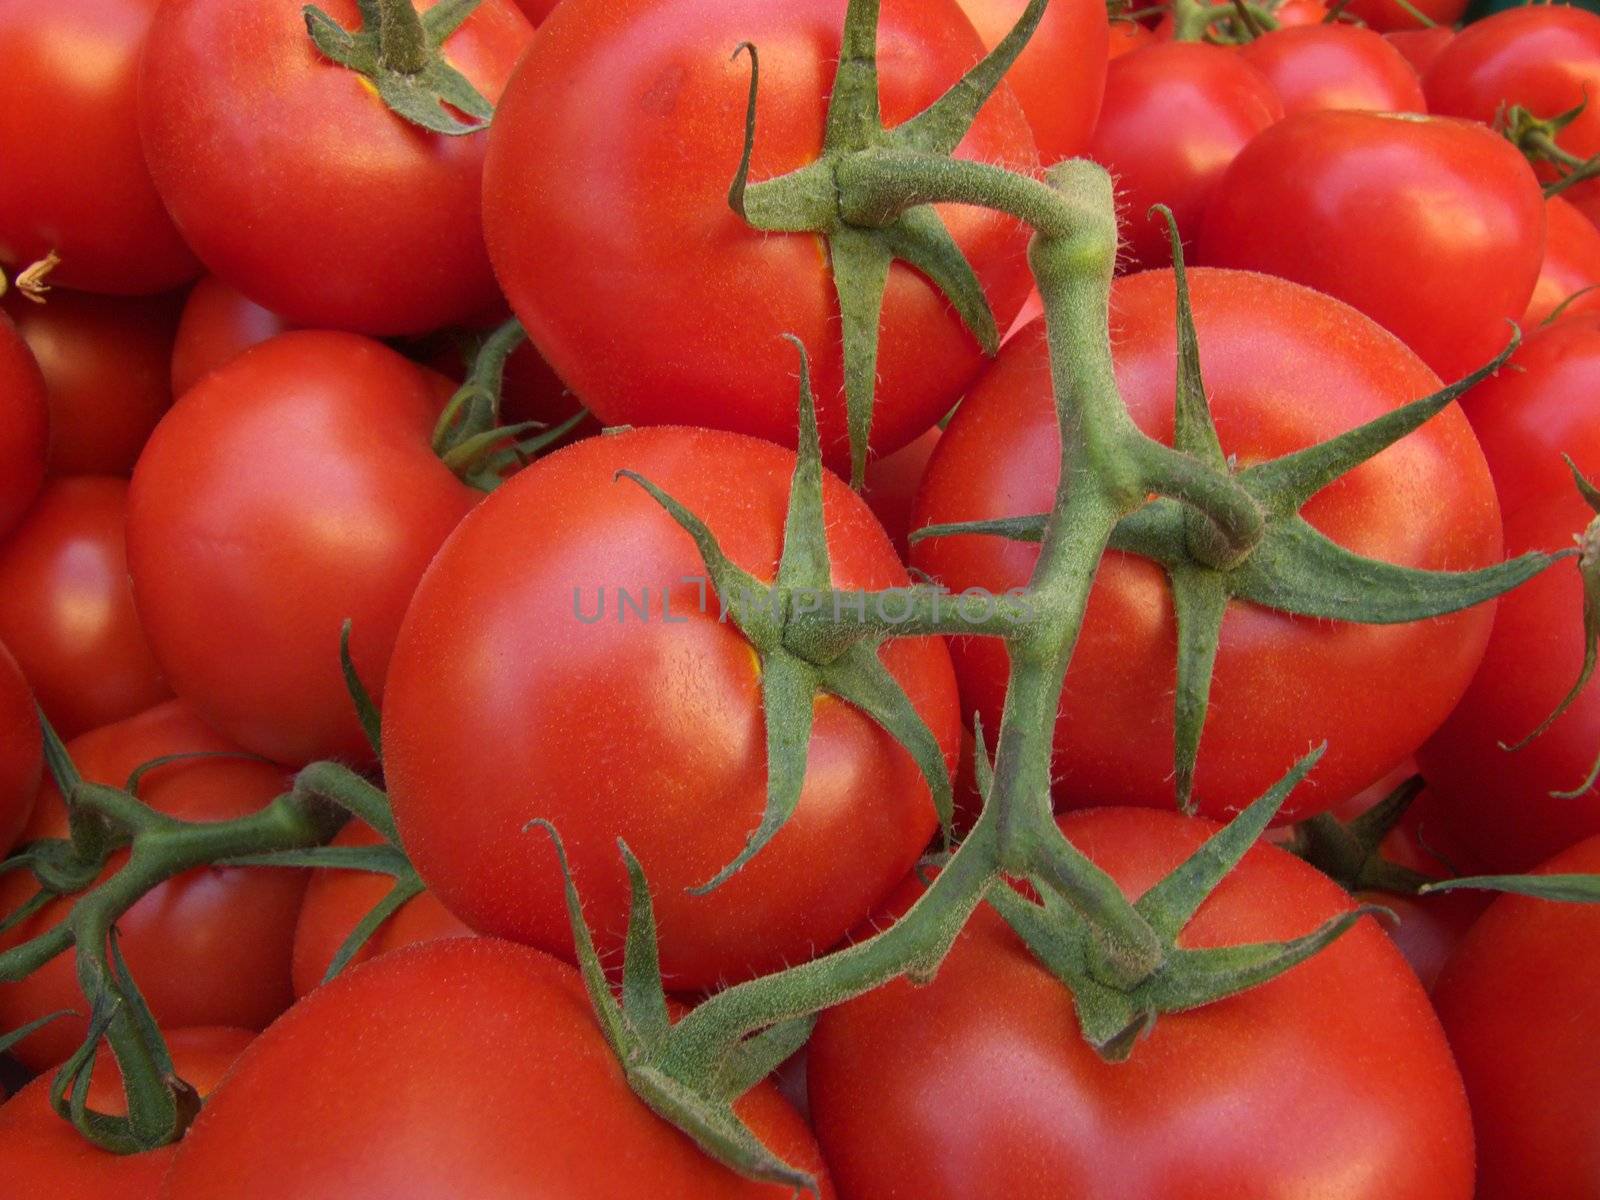 Tomatoes by jbouzou